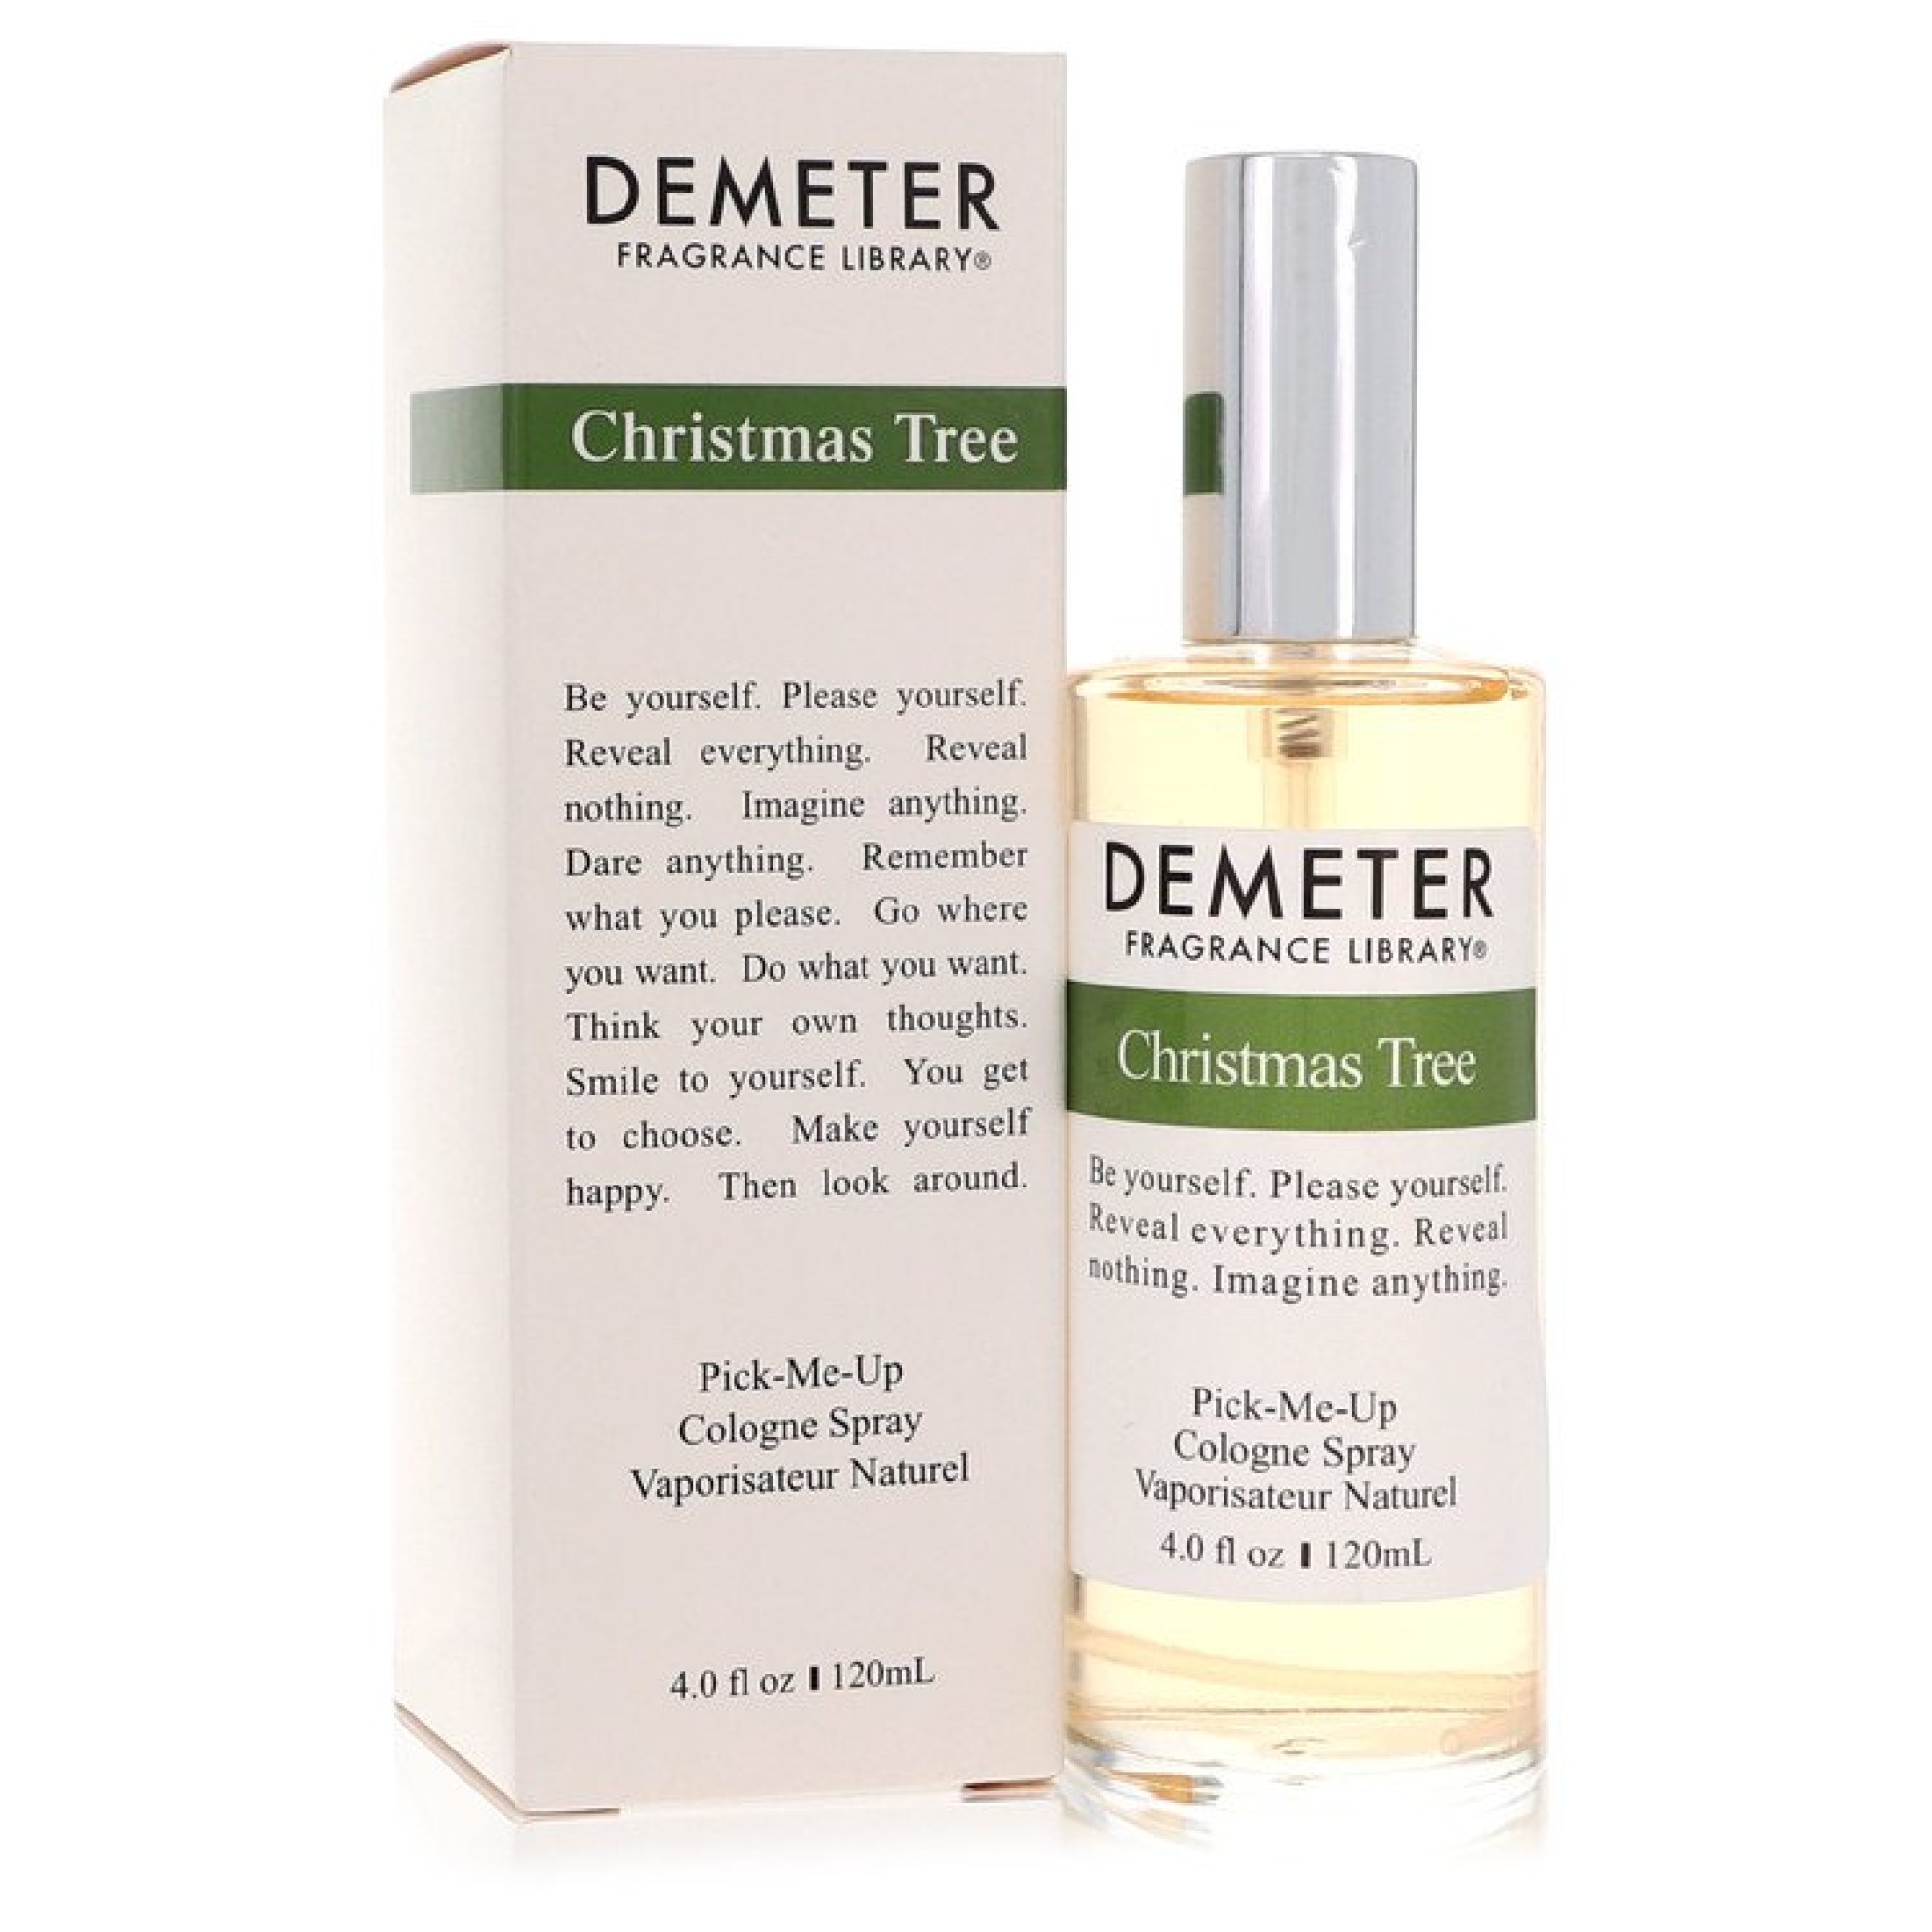 Demeter Christmas Tree Cologne Spray 120 ml